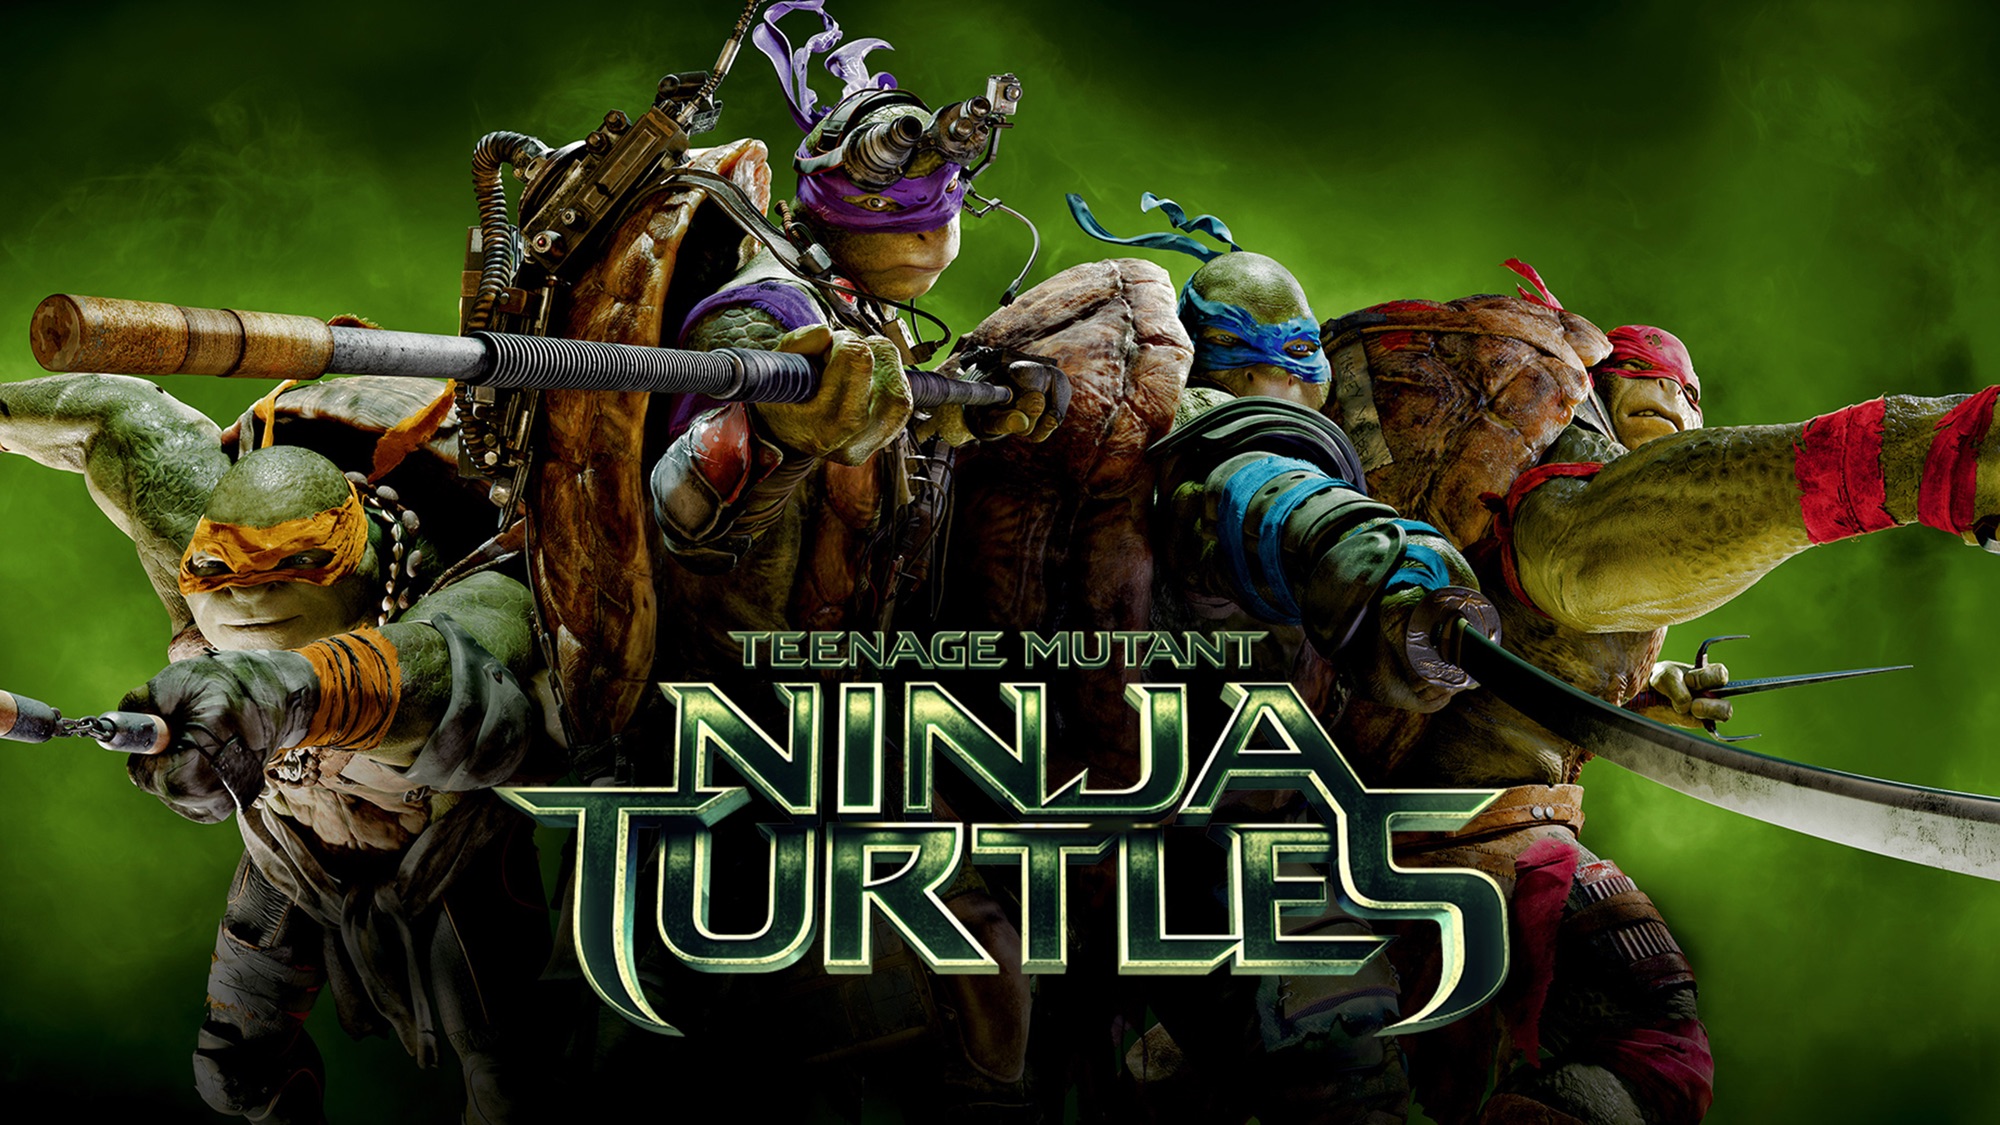 Descarga gratis la imagen Películas, Donatello (Tmnt), Rafael (Tmnt), Las Tortugas Ninja, Miguel Ángel (Tmnt), Leonardo (Tmnt), Ninja Turtles (2014) en el escritorio de tu PC